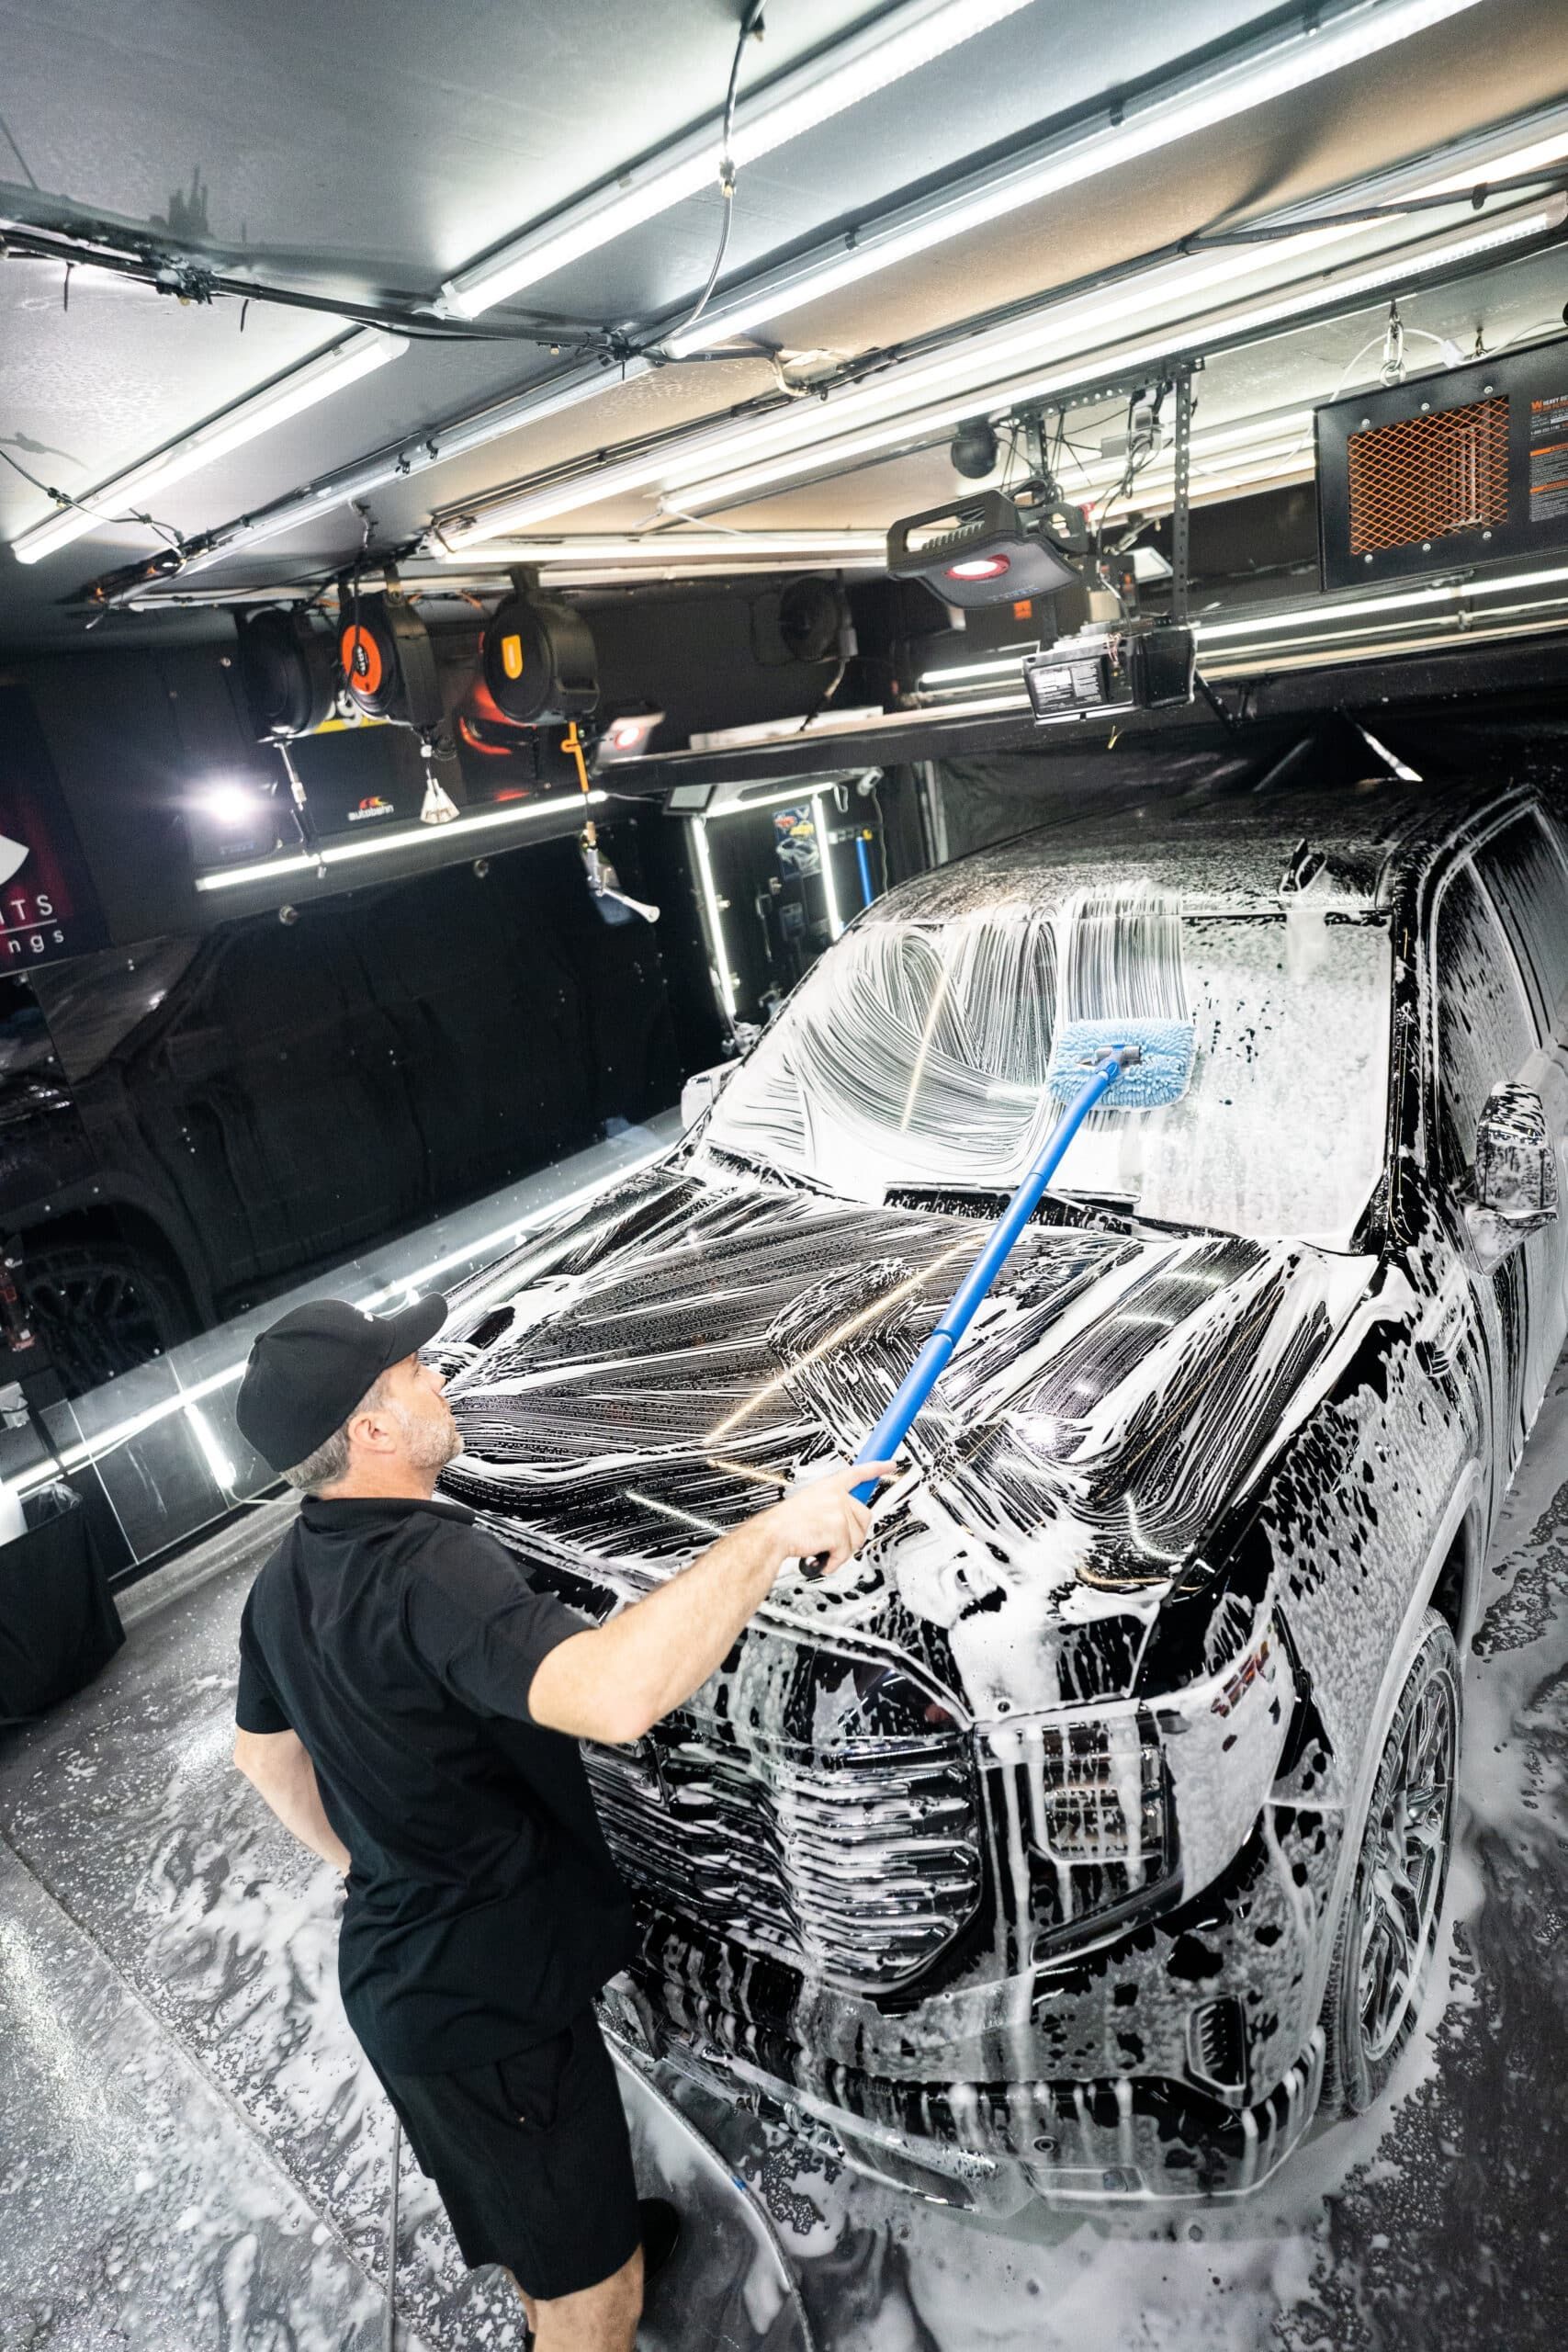 A man is washing a car with a foam brush in a garage.